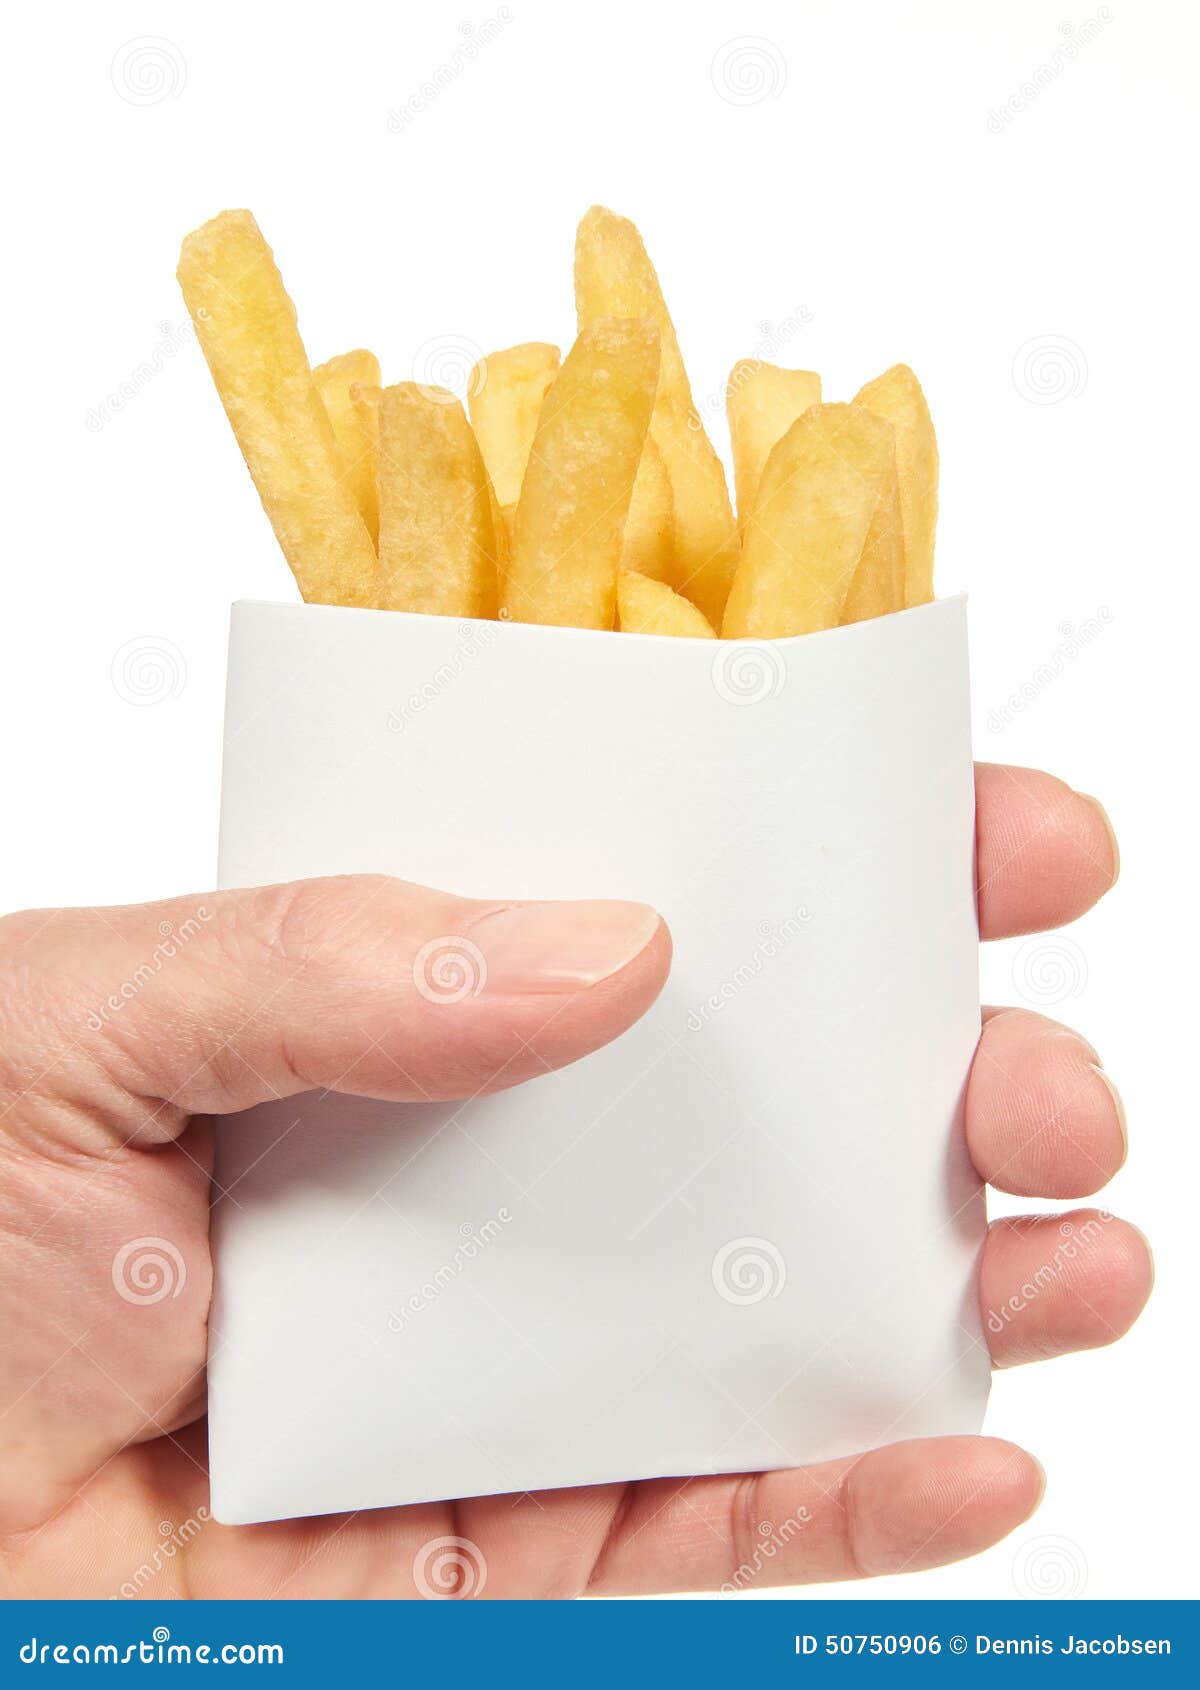 Ore-Ida Golden Crinkles French Fries Fried Frozen Potatoes, 32 oz Bag -  Fairway